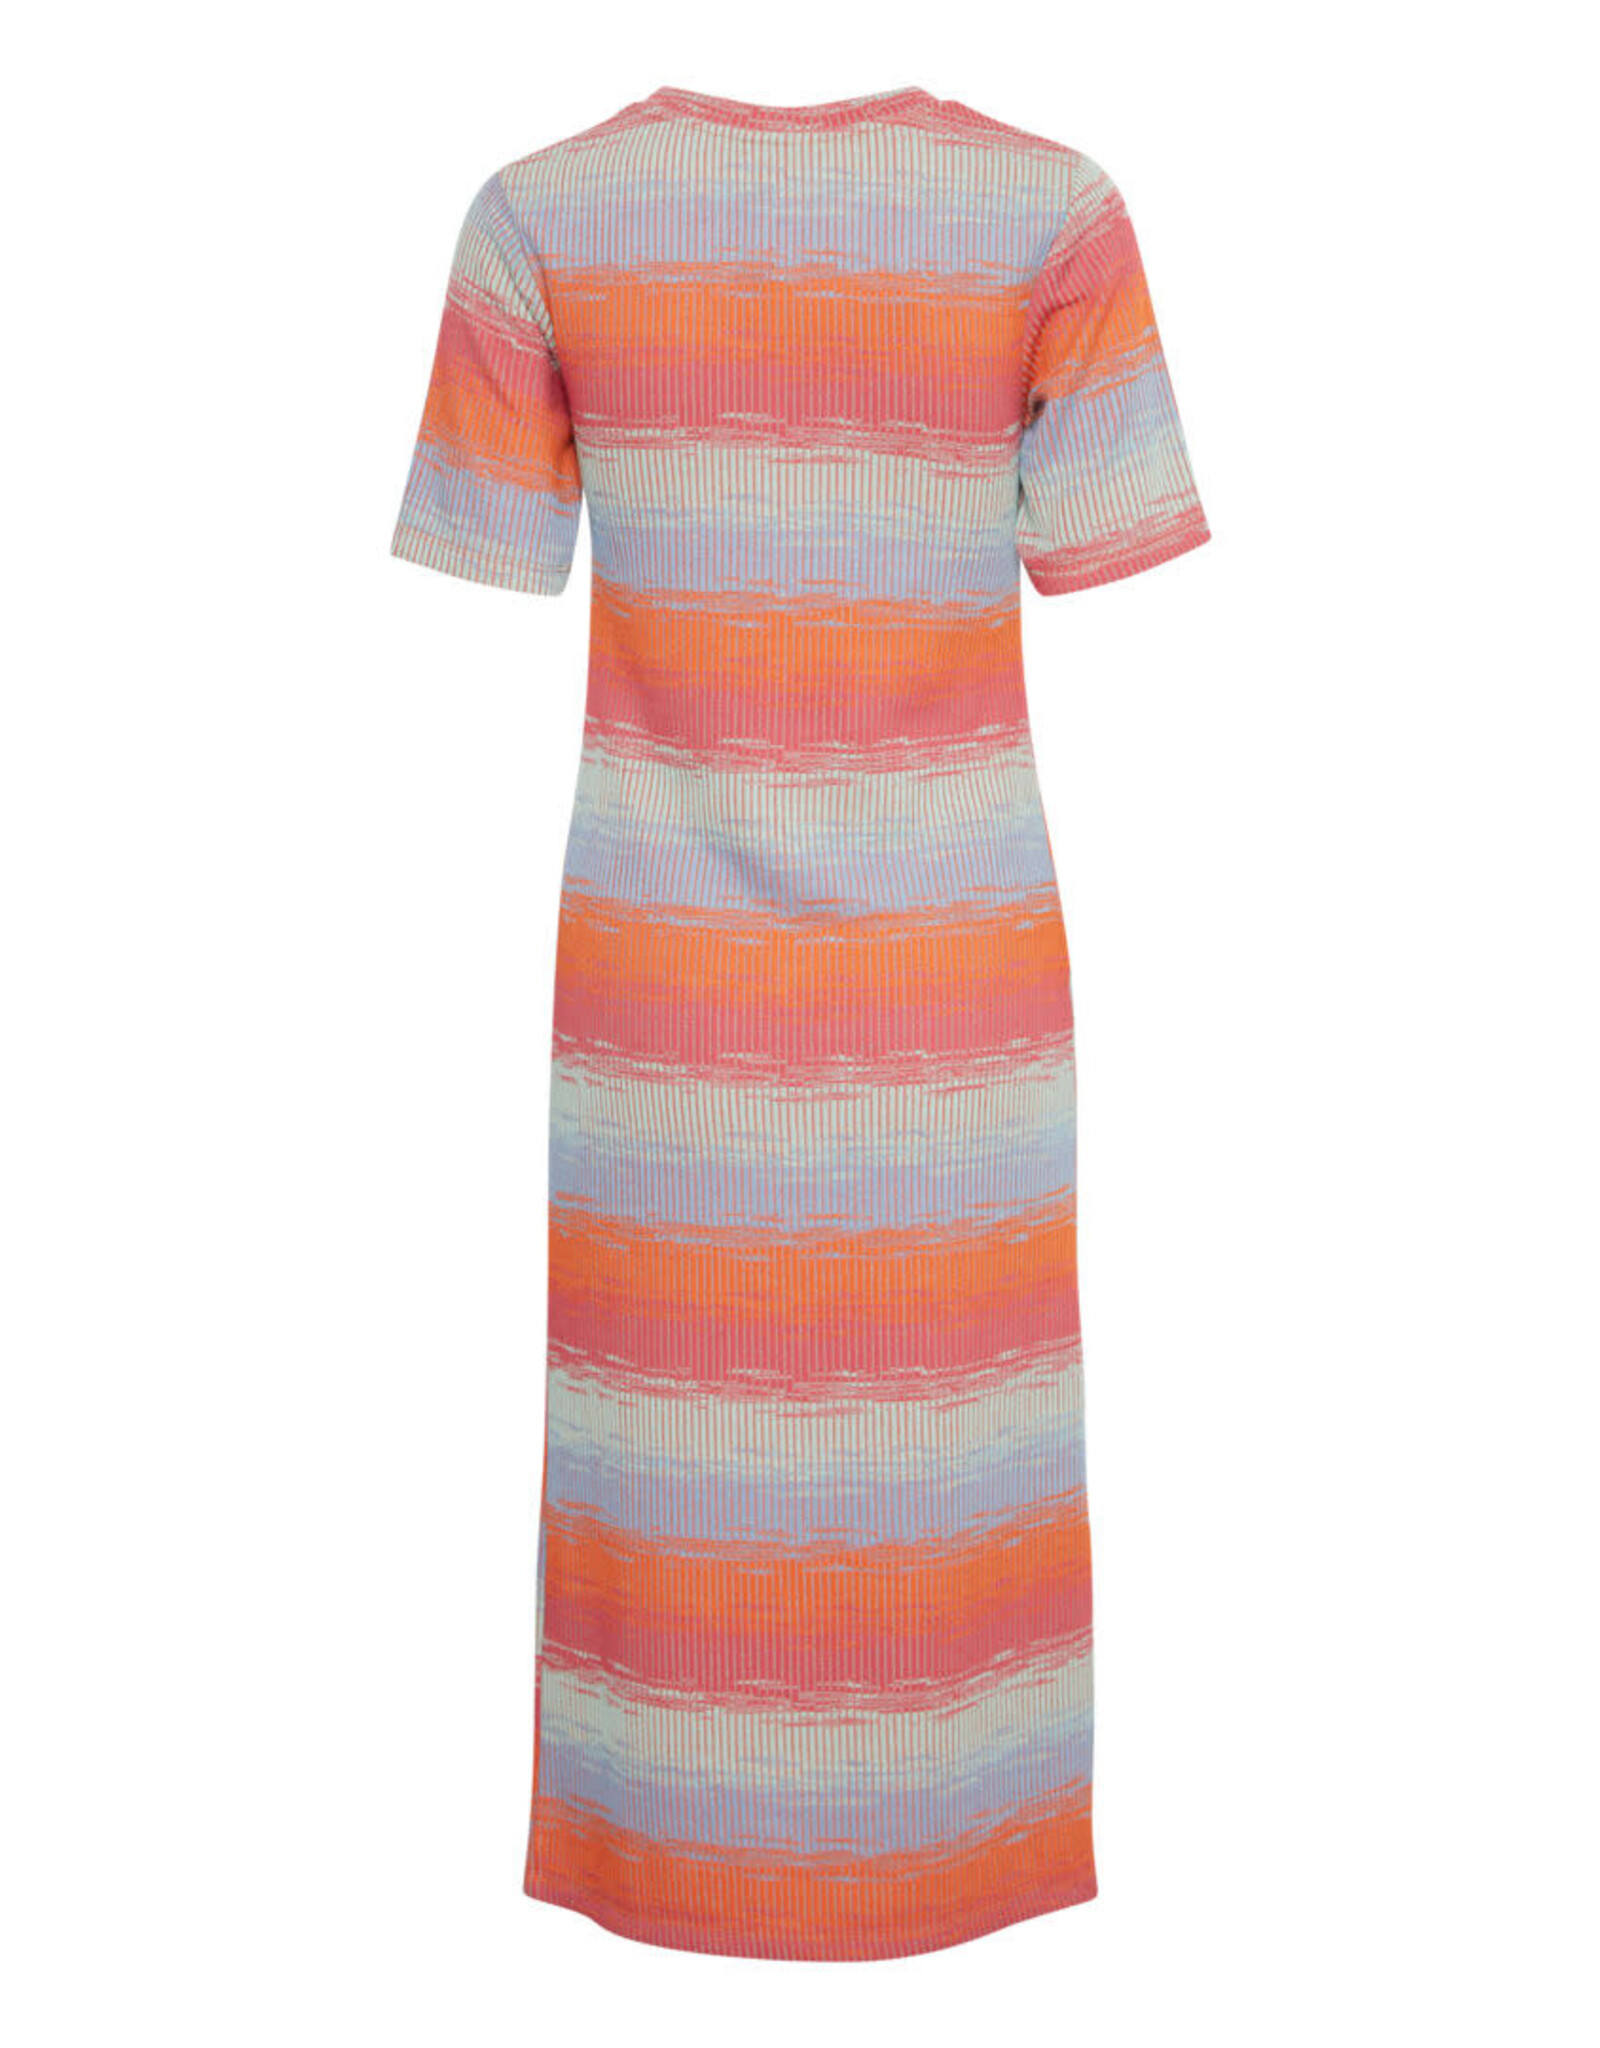 ICHI ICHI - Odela dress (multi colour)